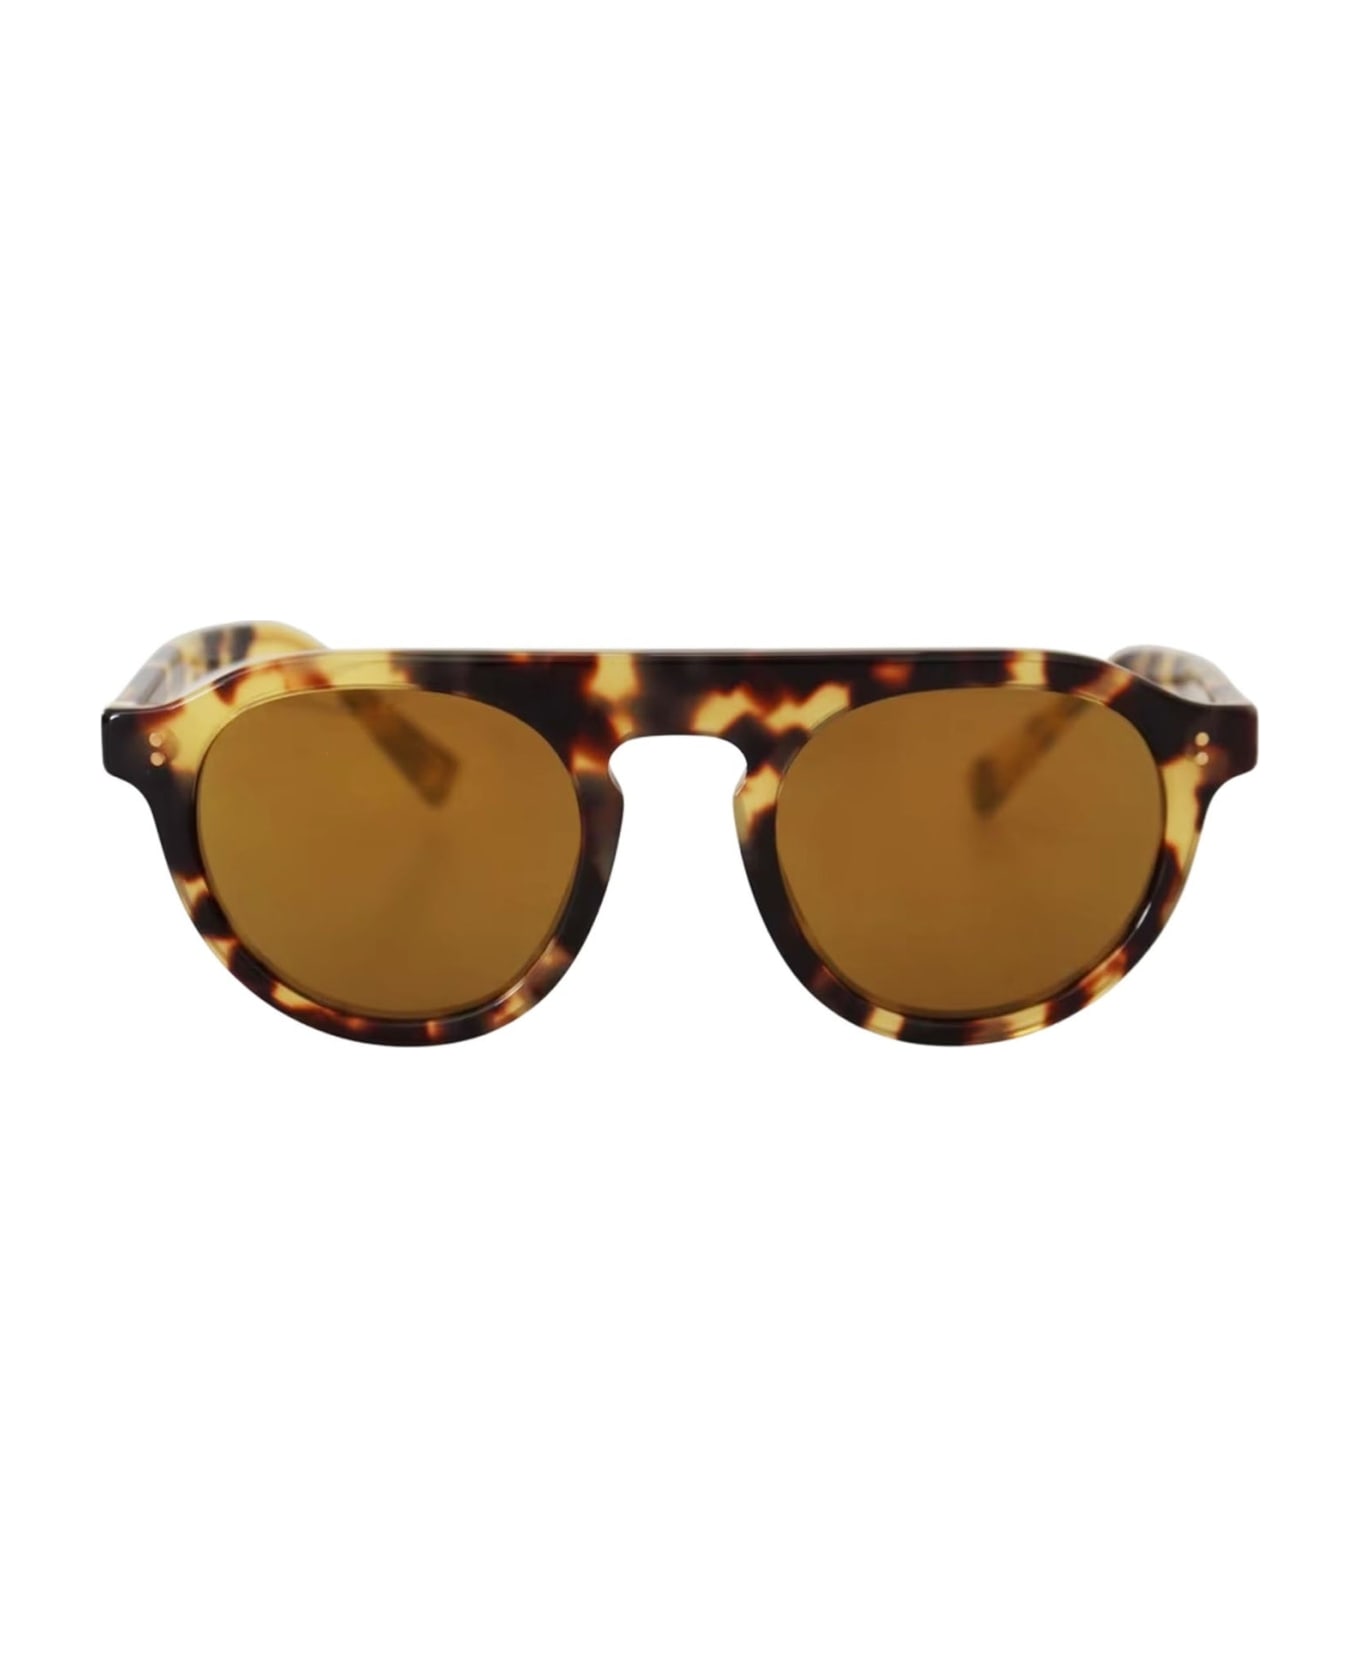 Dolce & Gabbana Light Havana Sunglasses - Gold